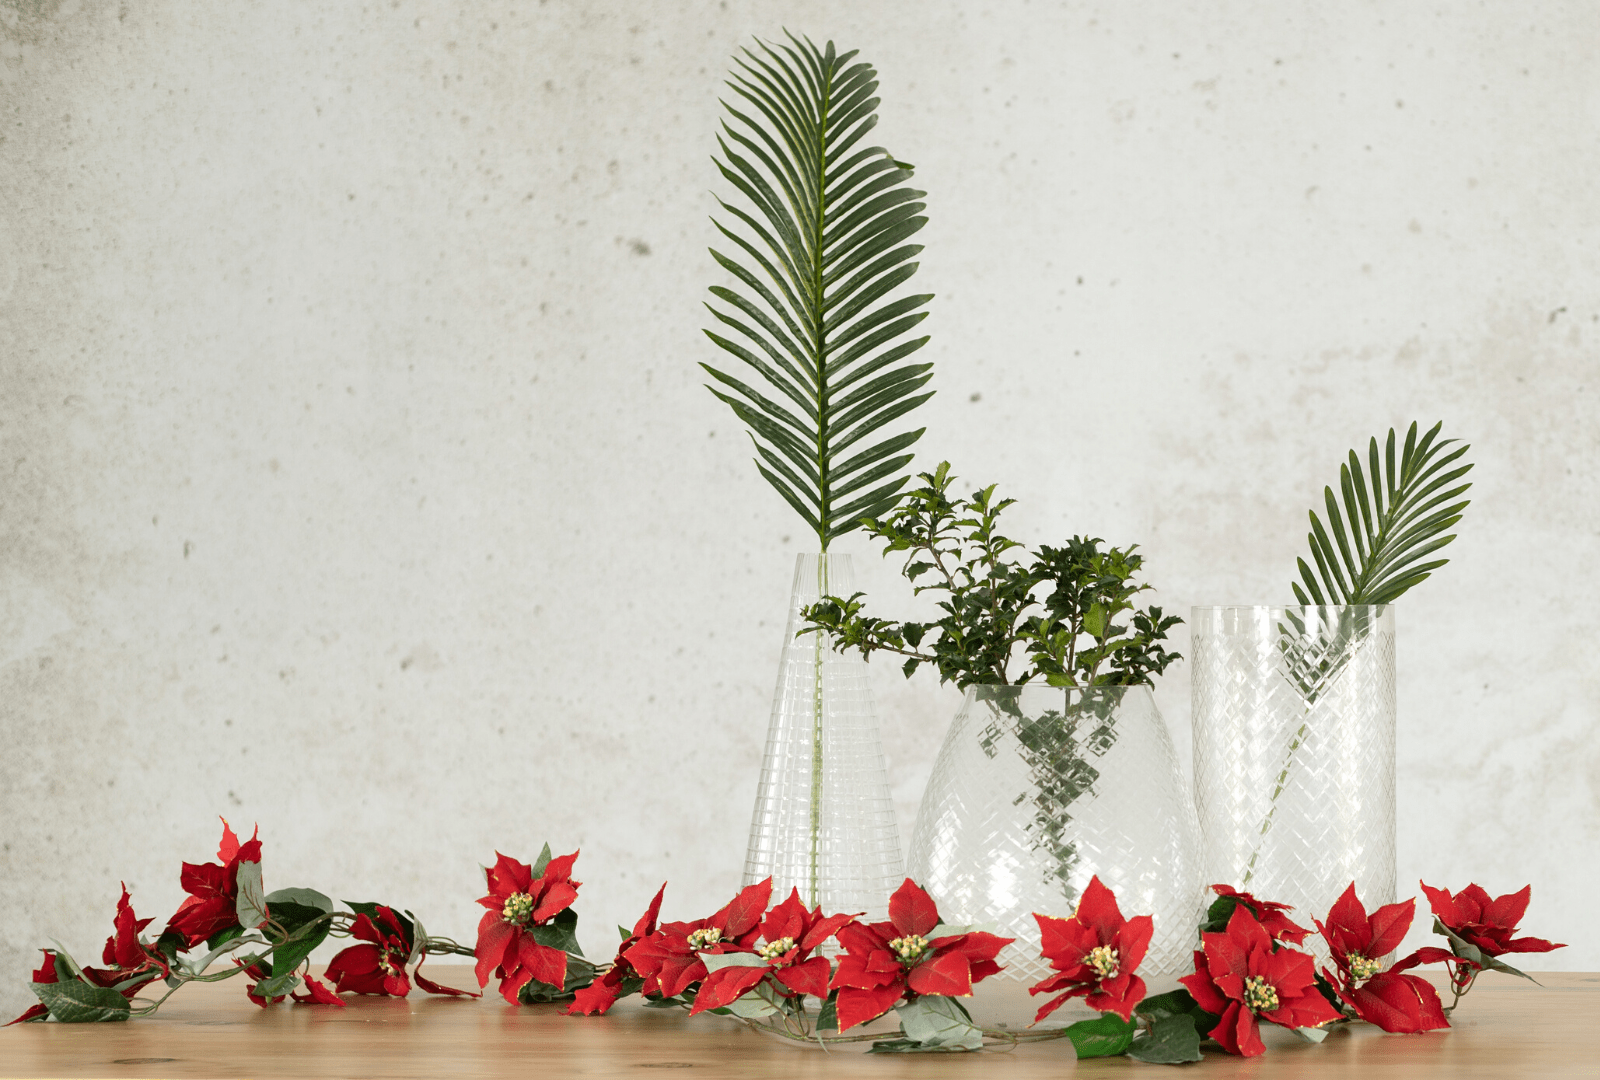 10 Tips For Creating A Classy Christmas Décor Setup: